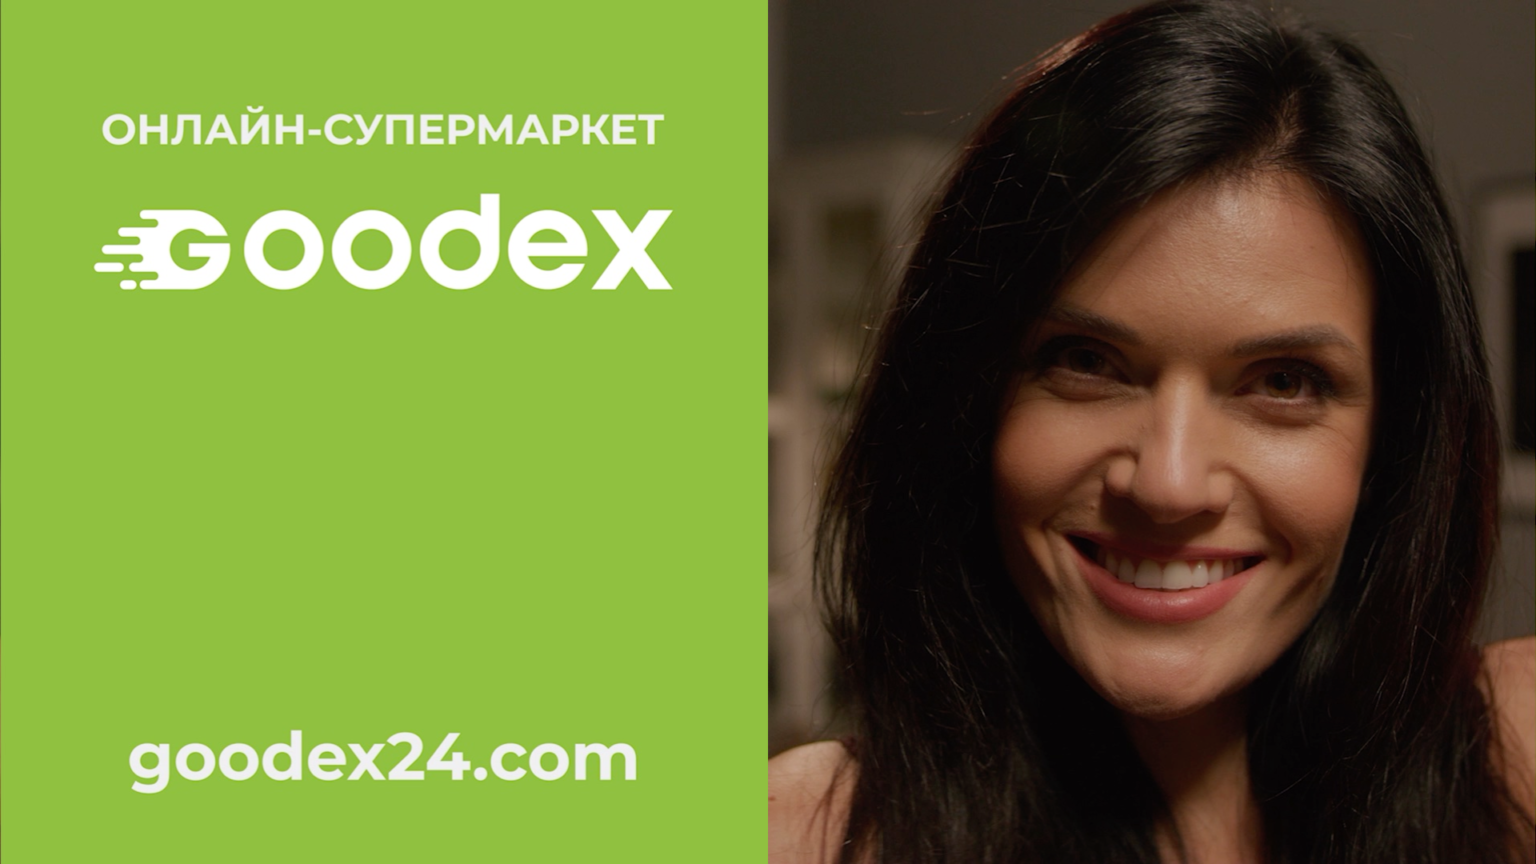 Full-Service Marketing Campaign for Goodex cover